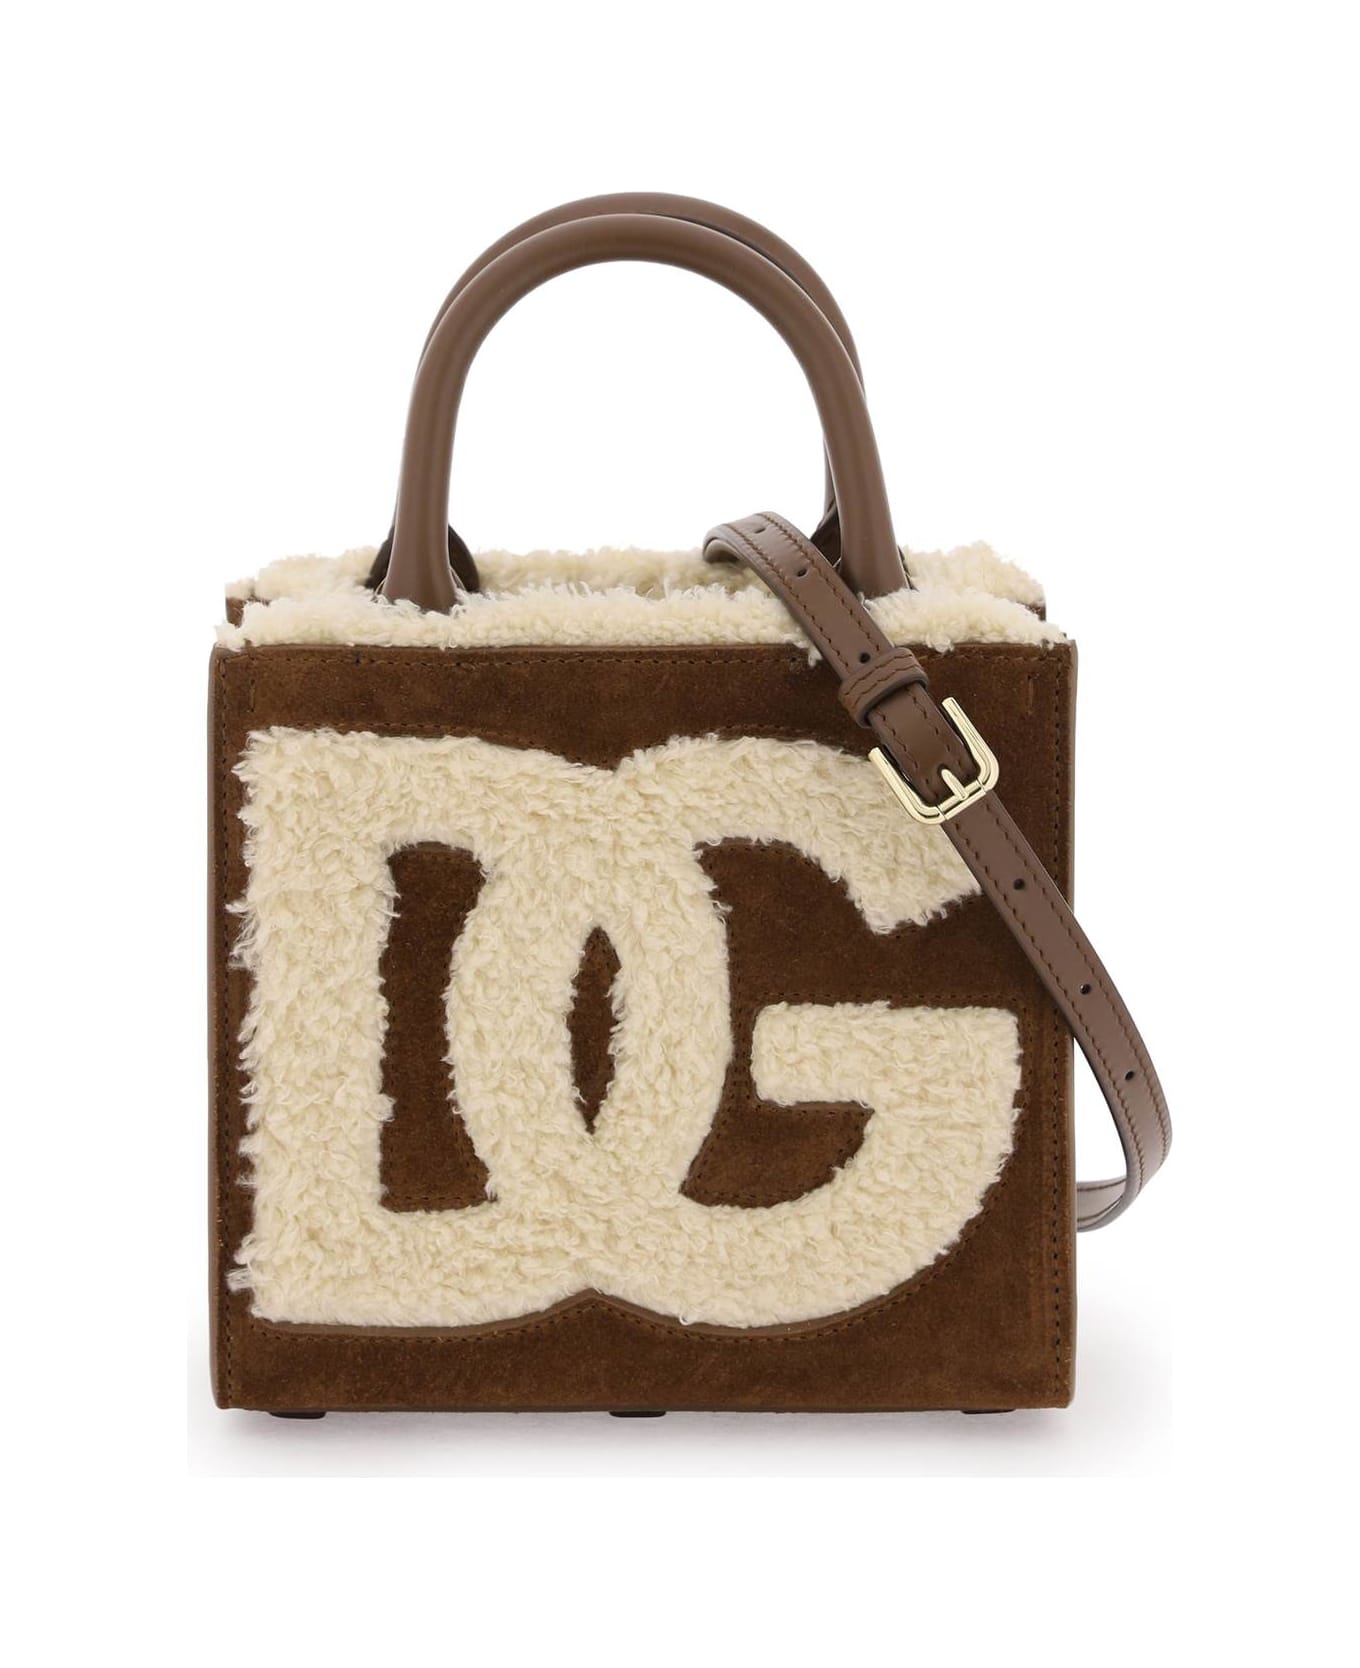 Dolce & Gabbana Dg Daily Mini Suede And Shearling Tote Bag - MARRONE CAFFELATTE (Beige)